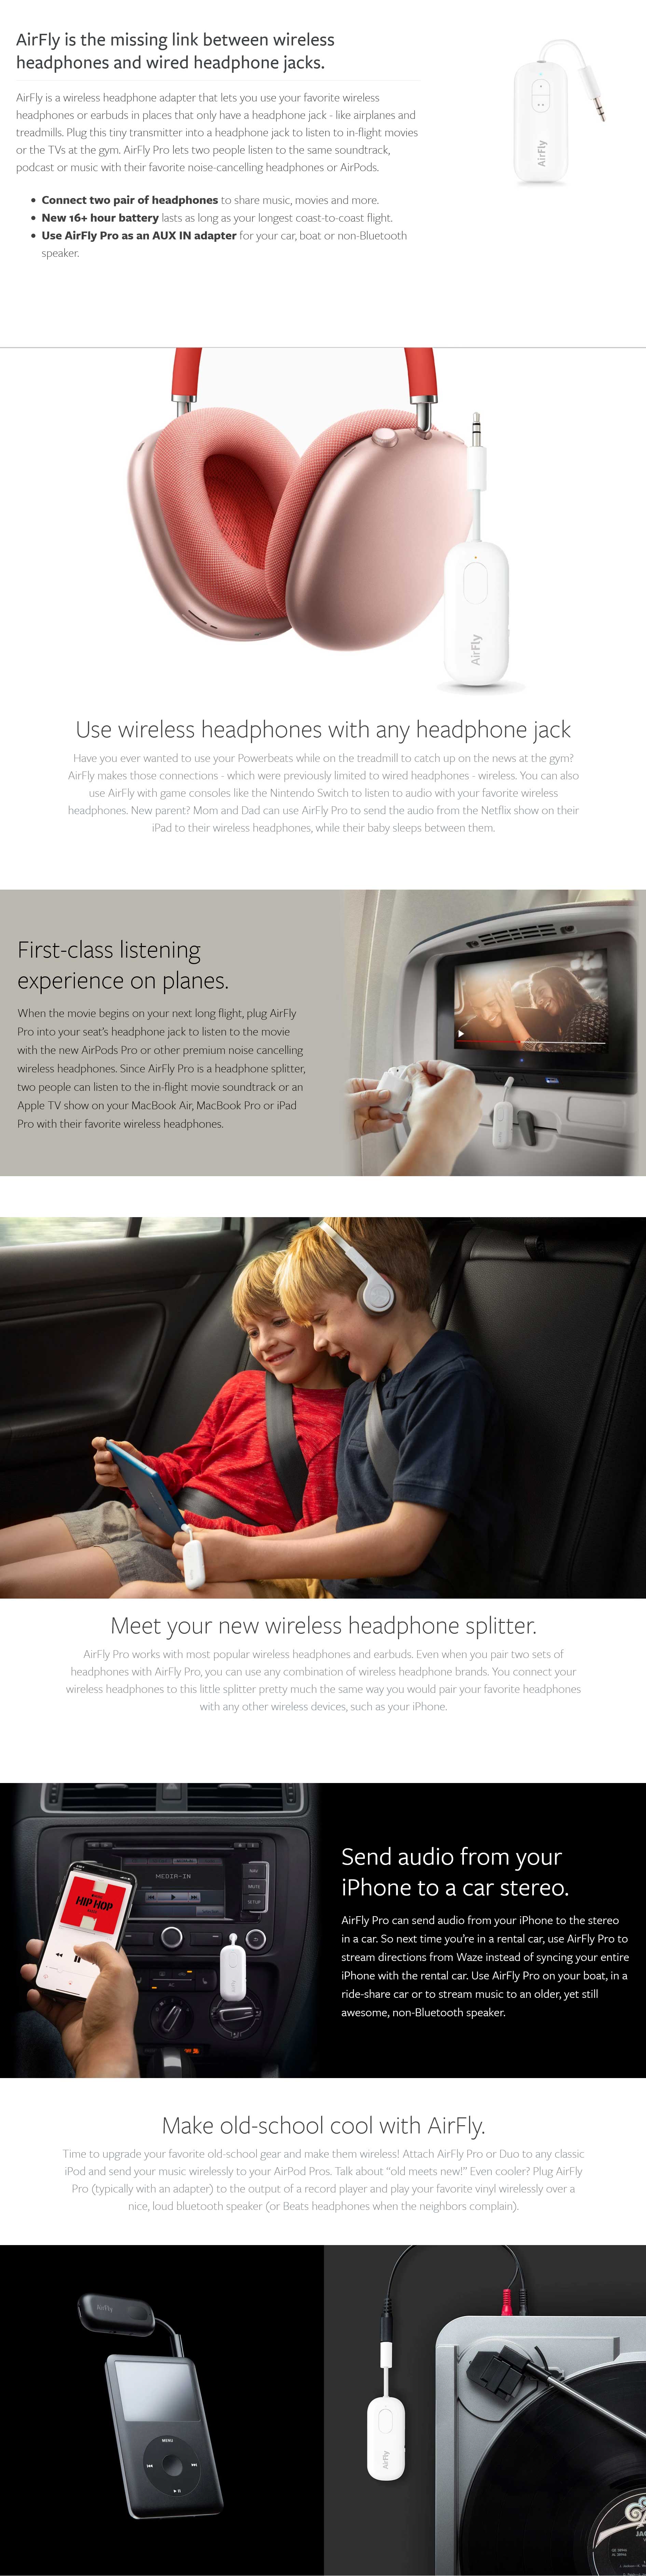 Twelve South AirFly Pro Wireless Audio Headphone Adapter - White